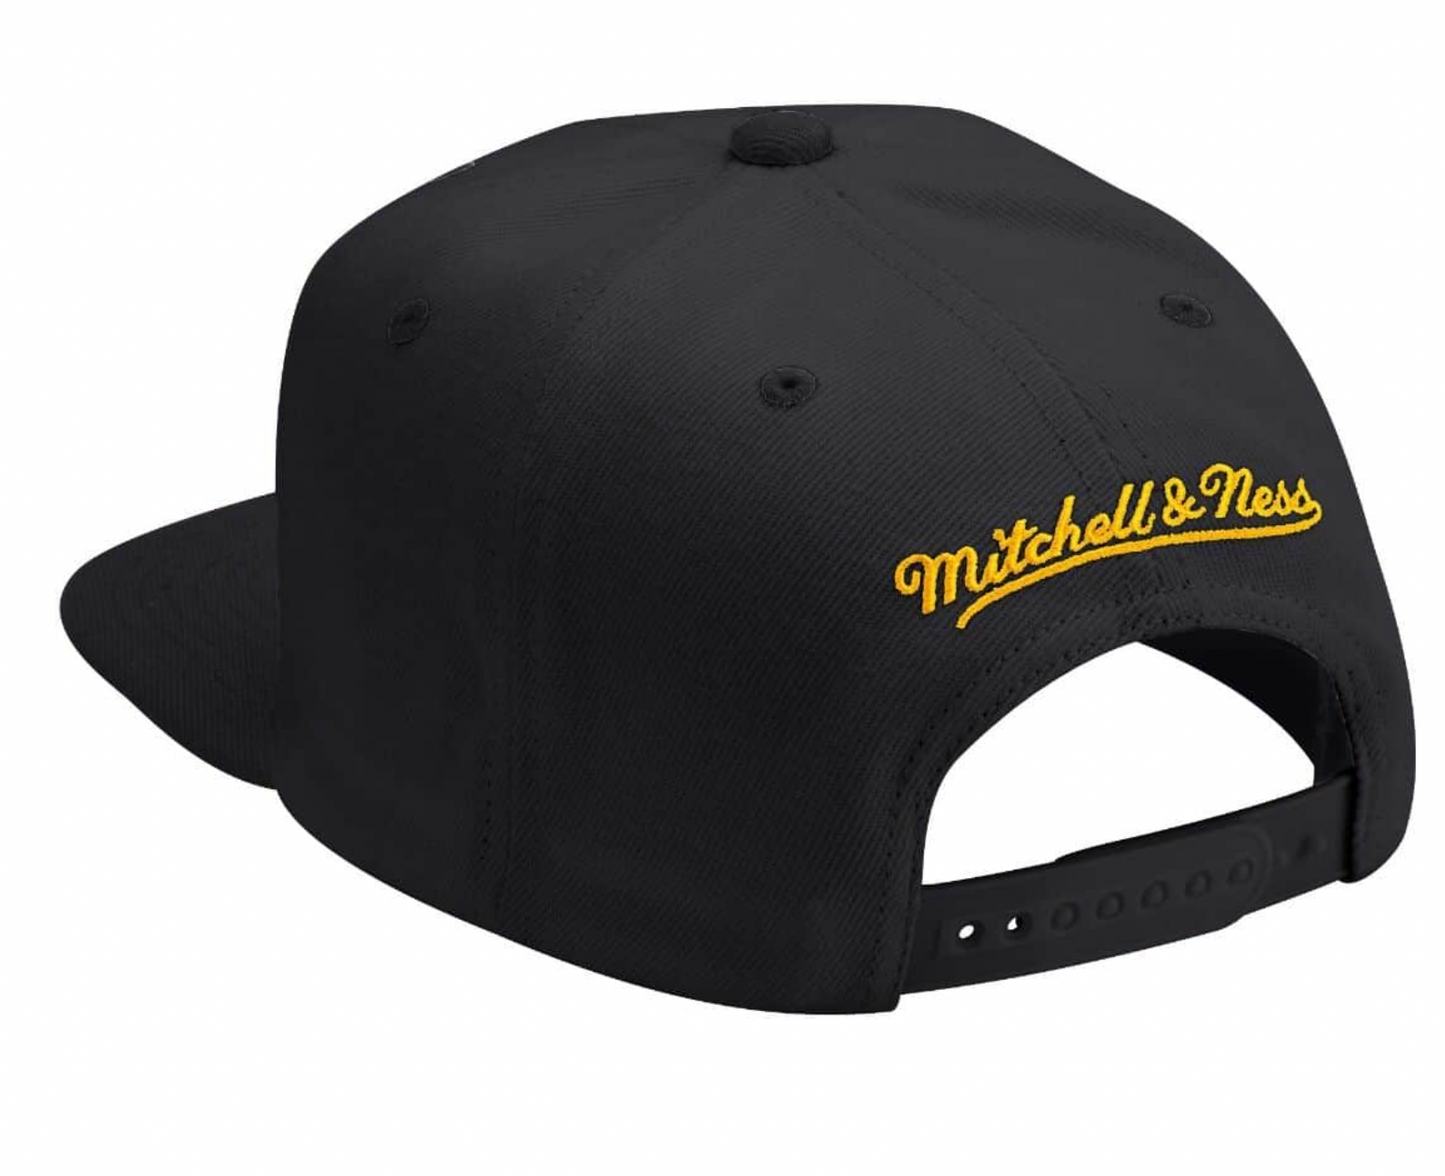 Men's Mitchell & Ness Los Angeles Lakers Black Adjustable Snapback Hat